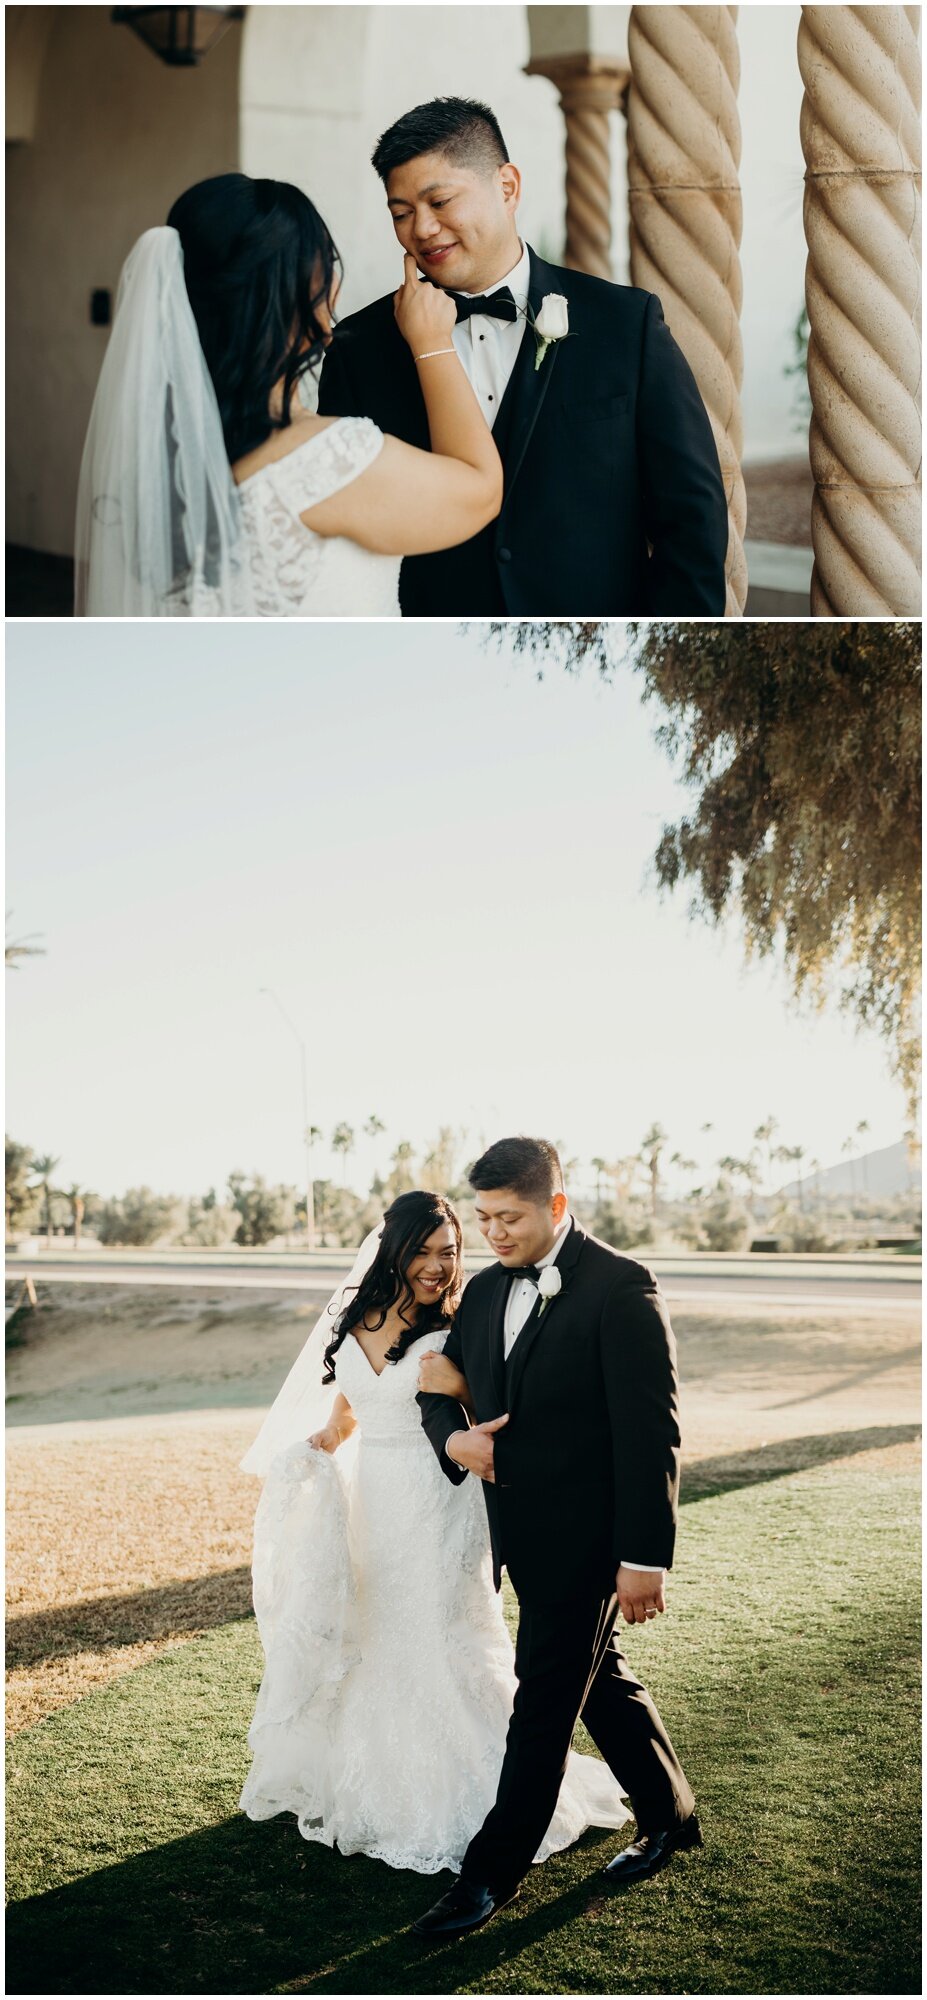 Documentary Wedding Photography in Phoenix, Arizona.